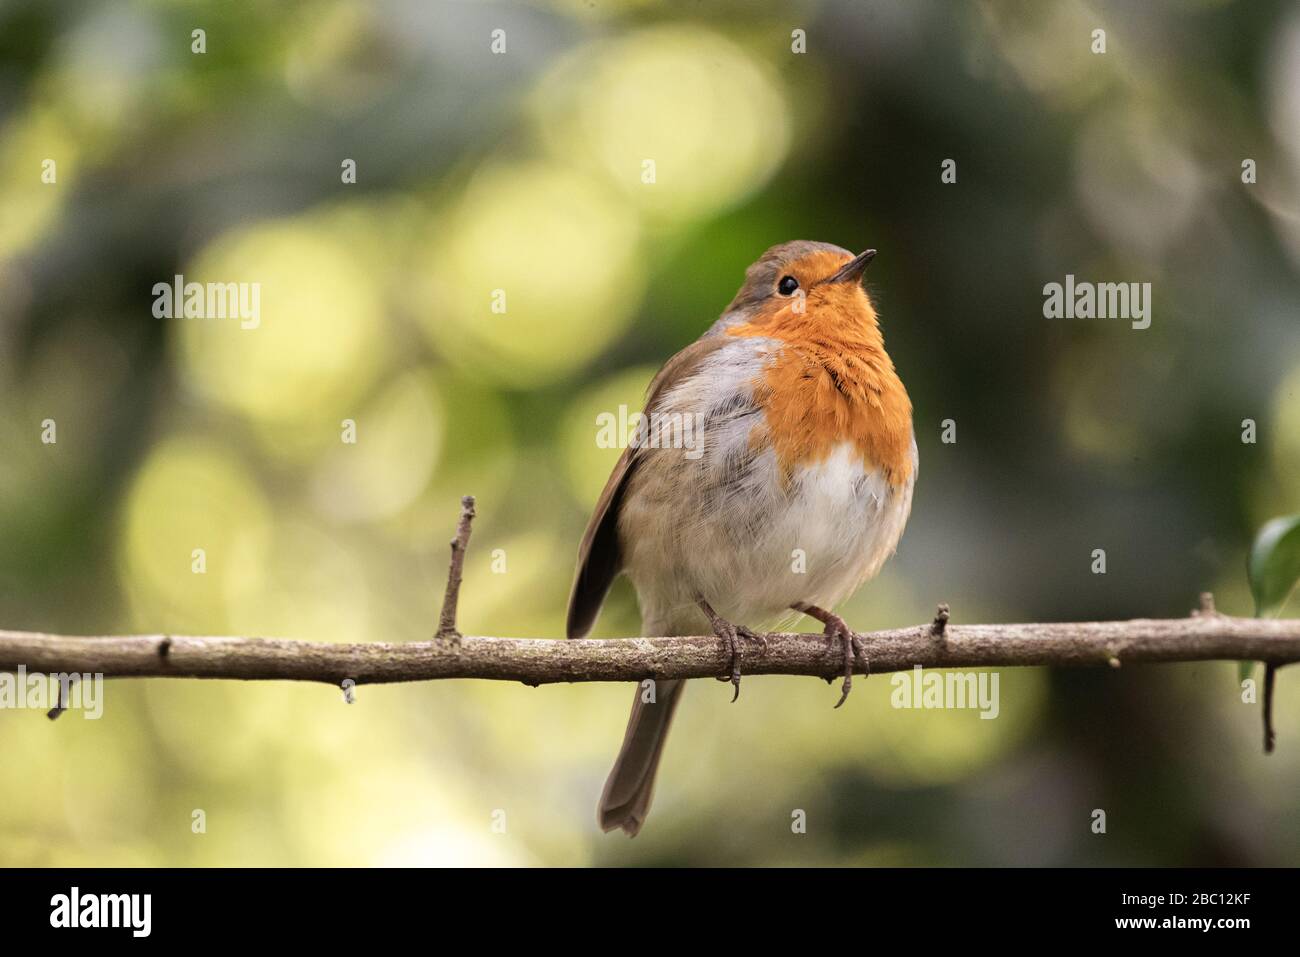 UK Wildlife - robin sat on a branch - Towcester, Northamptonshire, UK Stock Photo